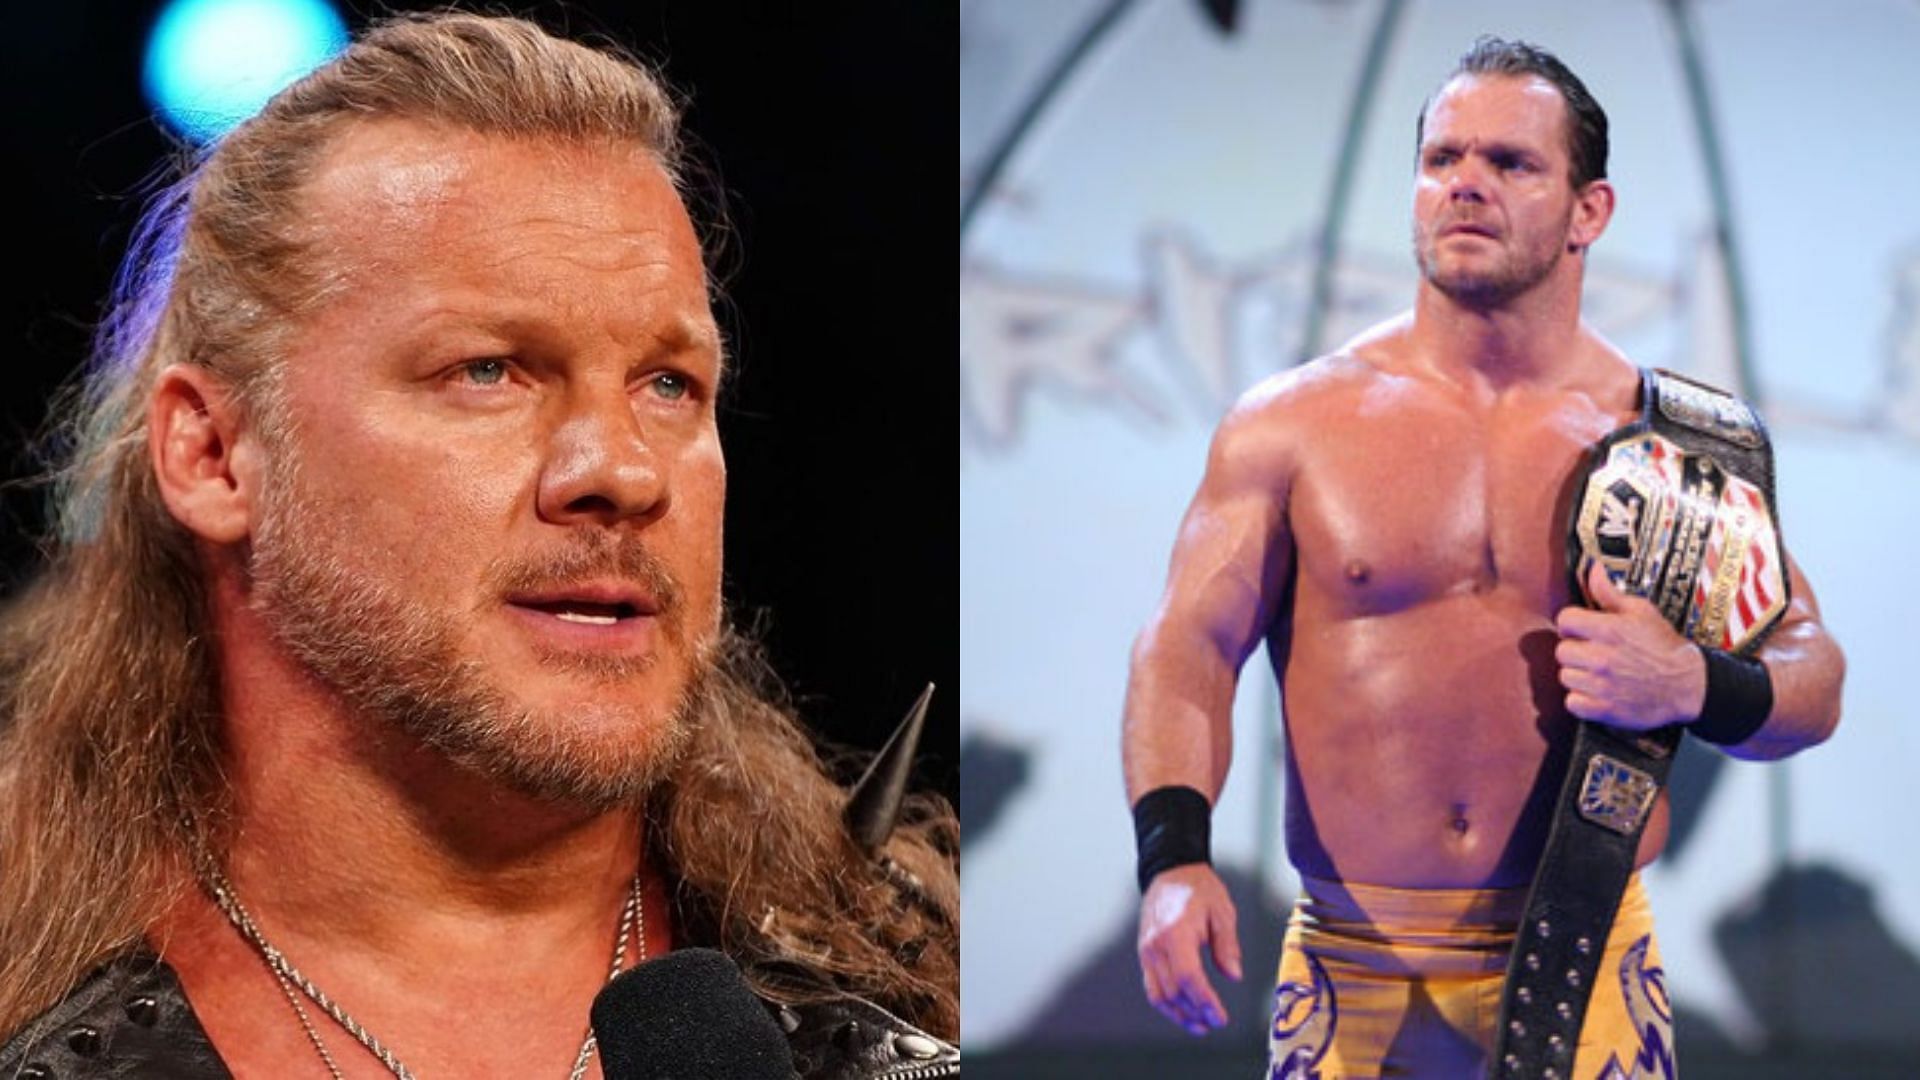 Chris Jericho and Chris Benoit were cruiserweights in WCW.